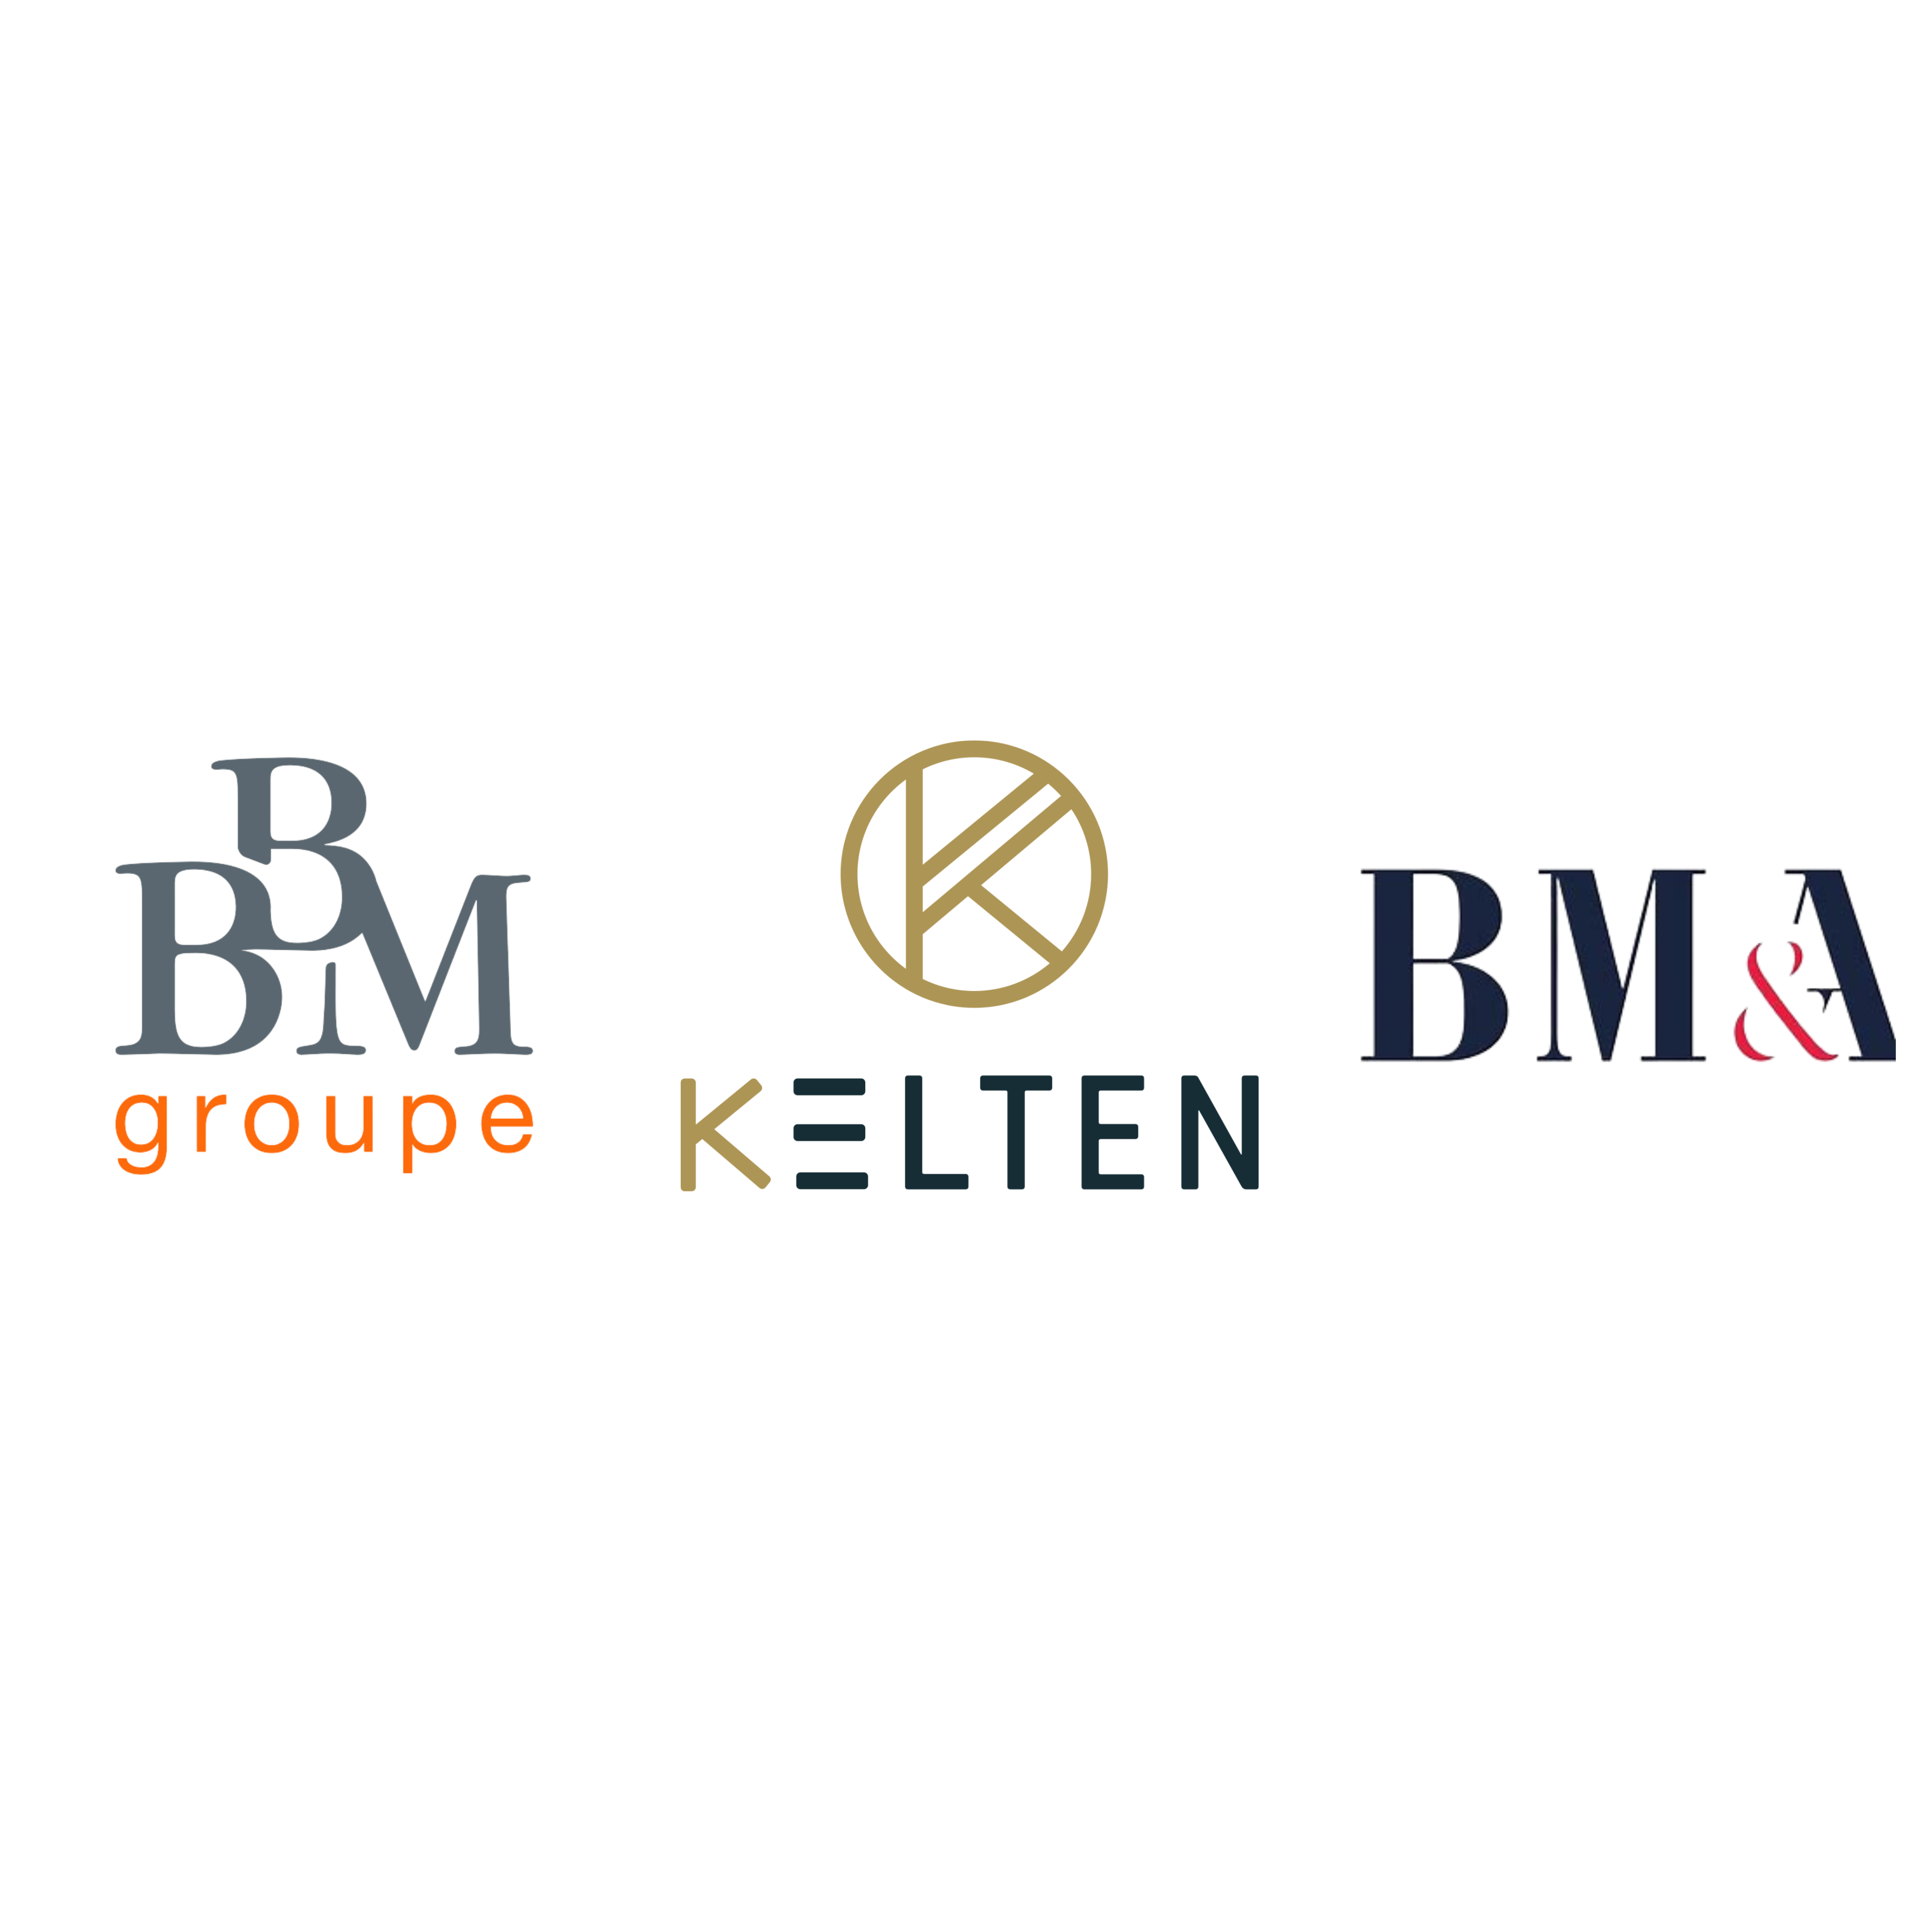 GROUPE BBM / KELTEN / BM&A